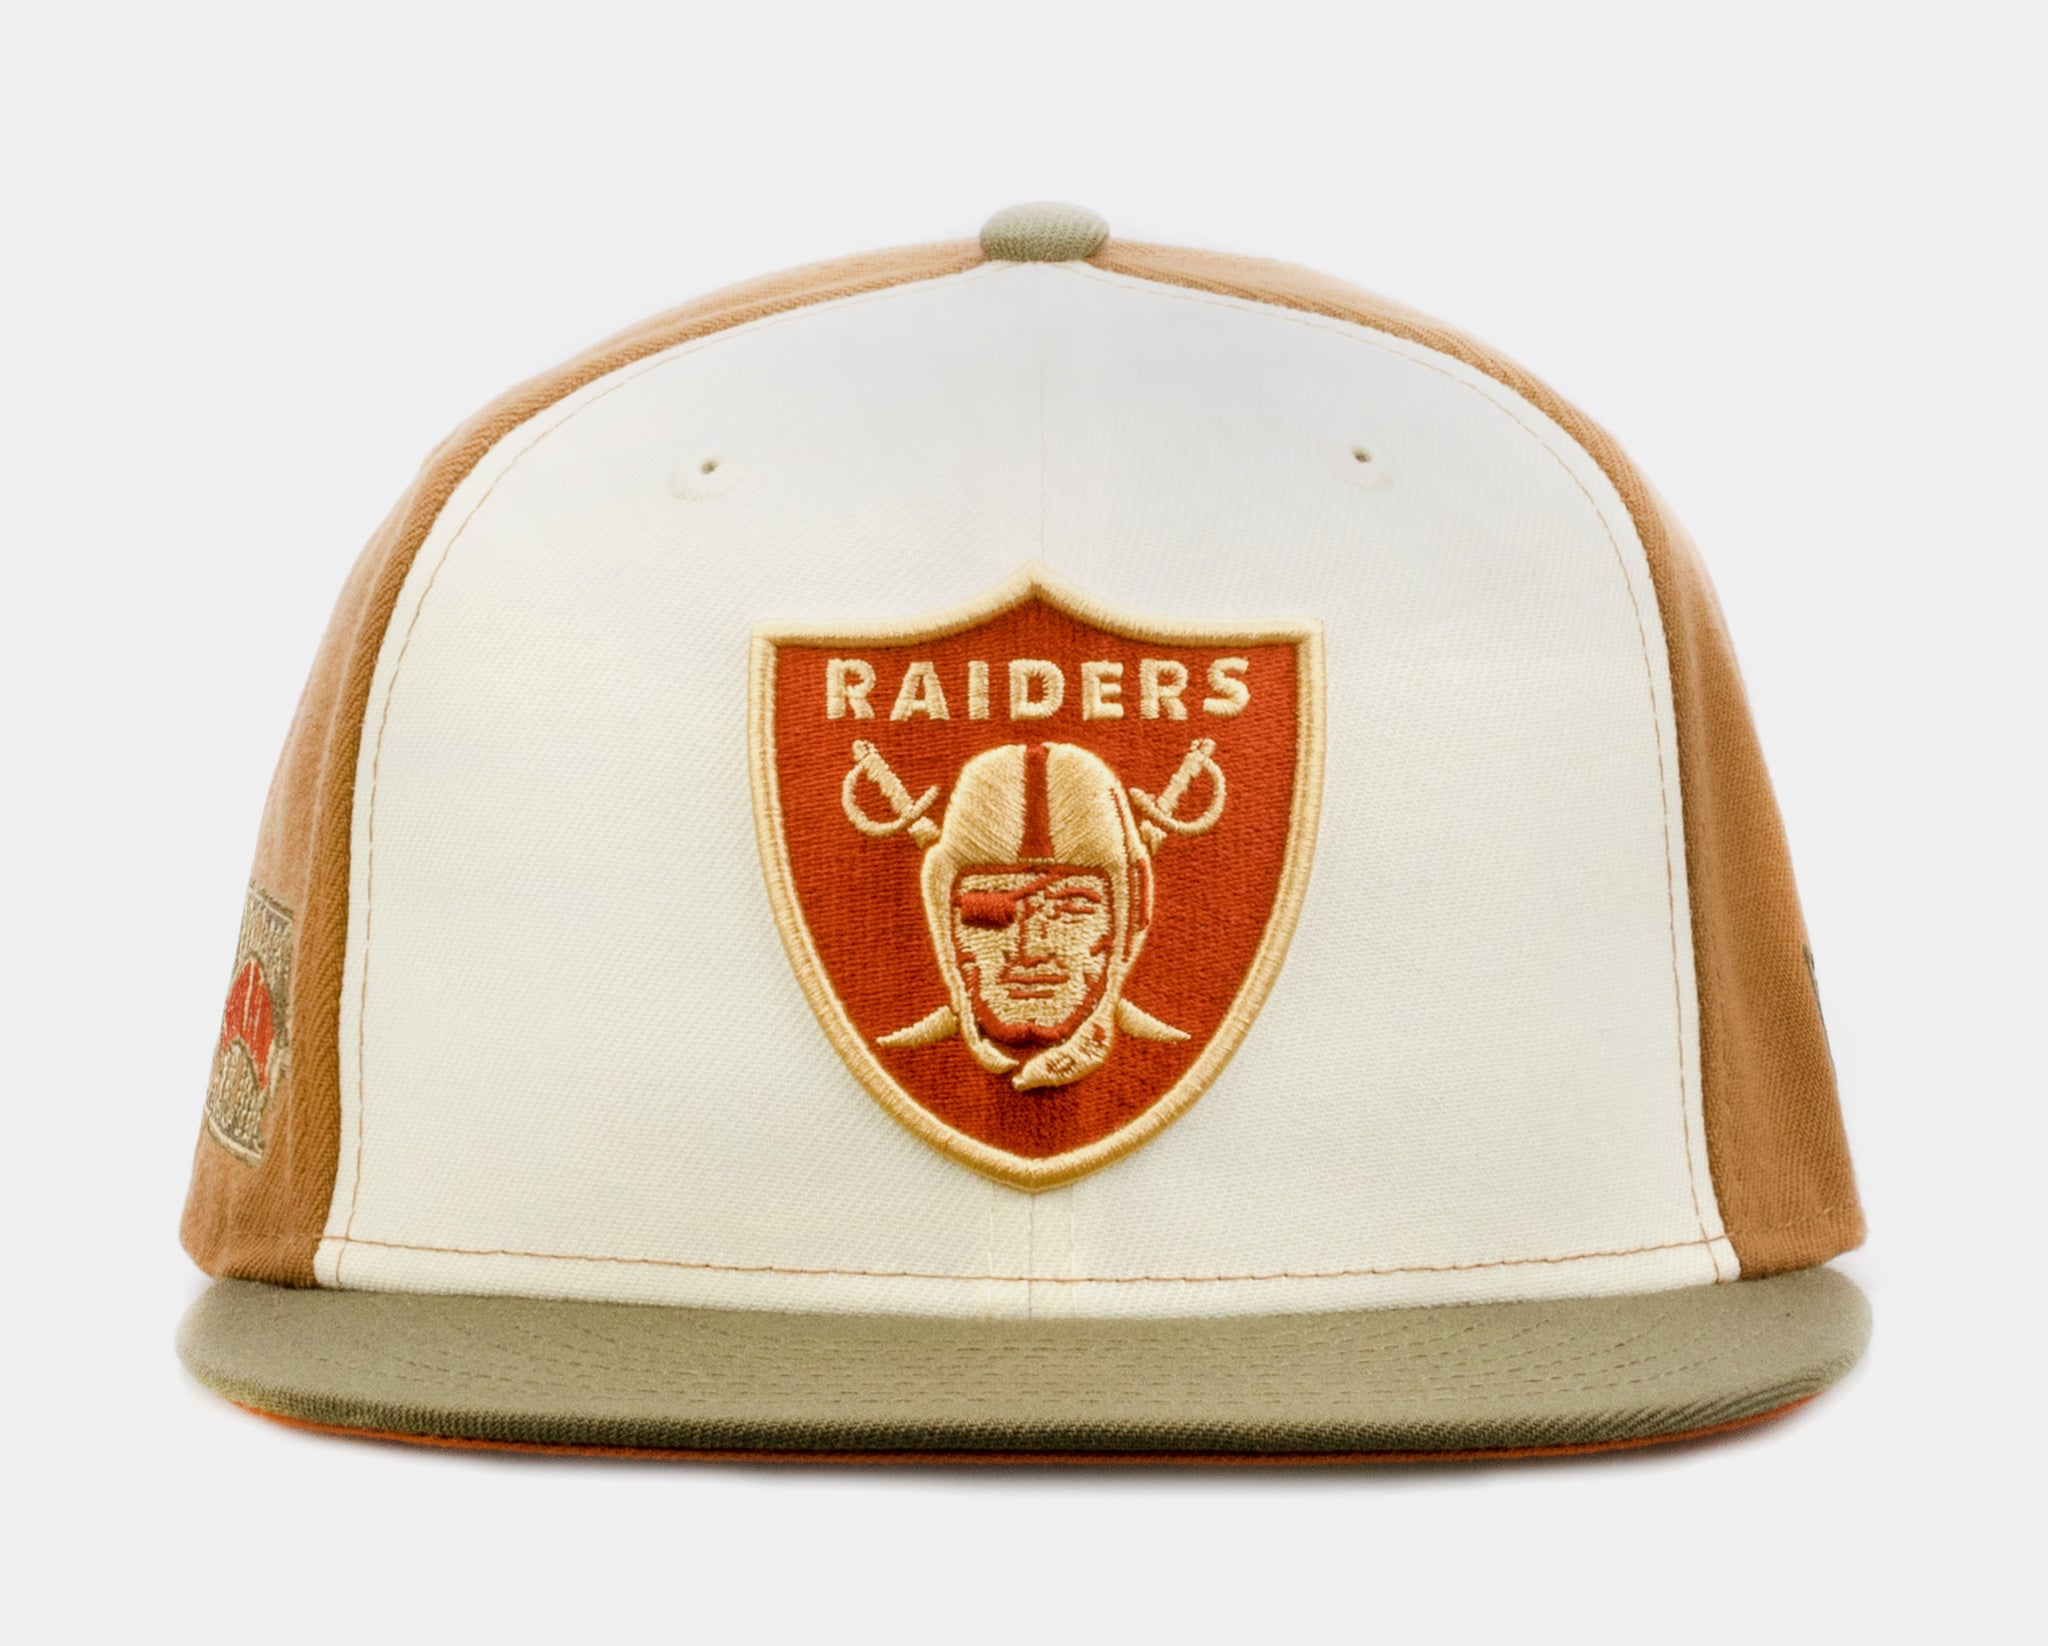 Men's Las Vegas Raiders New Era Gold Color Pack 9FIFTY Snapback Hat